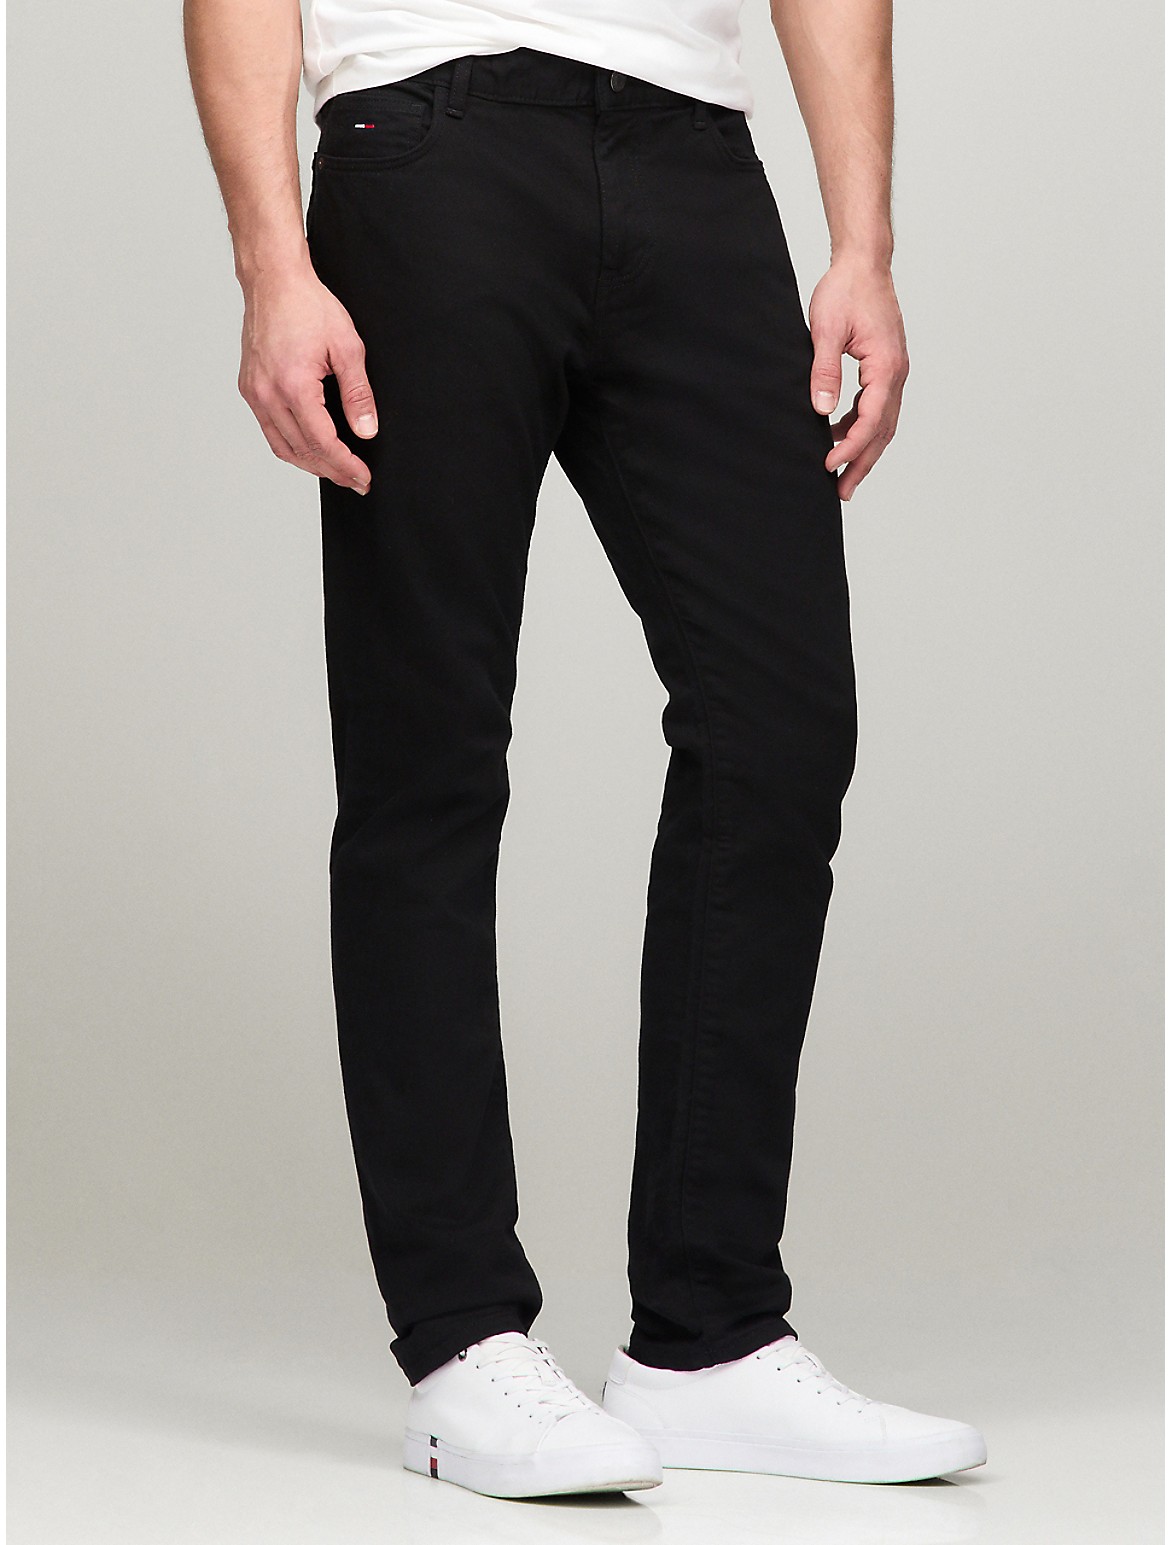 Tommy Hilfiger Men's Slim Fit Essential Black Jean